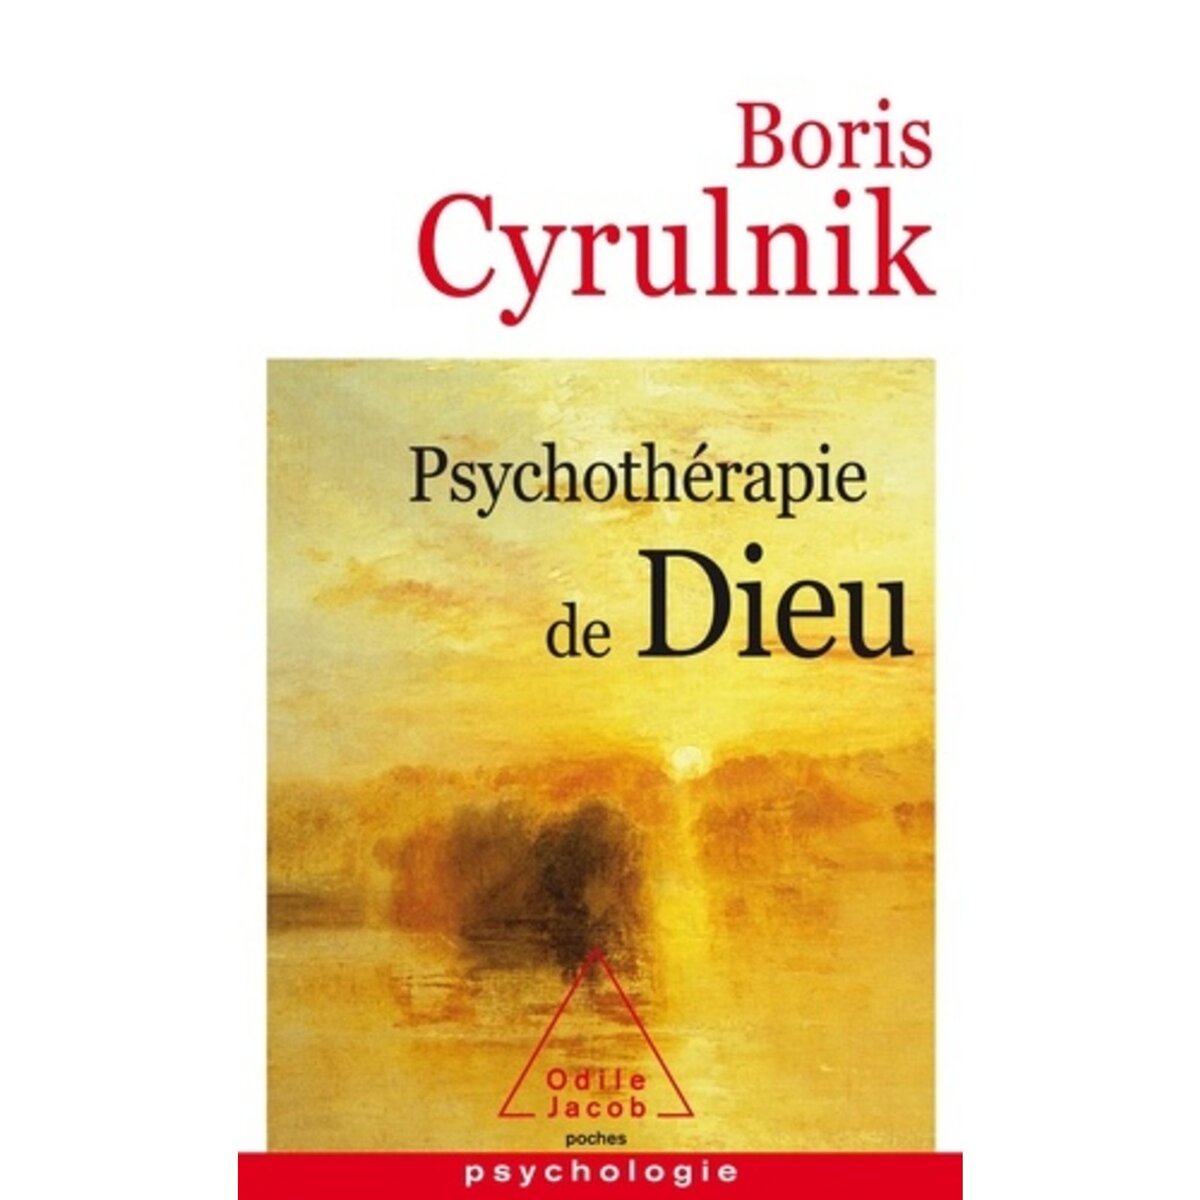  PSYCHOTHERAPIE DE DIEU, Cyrulnik Boris